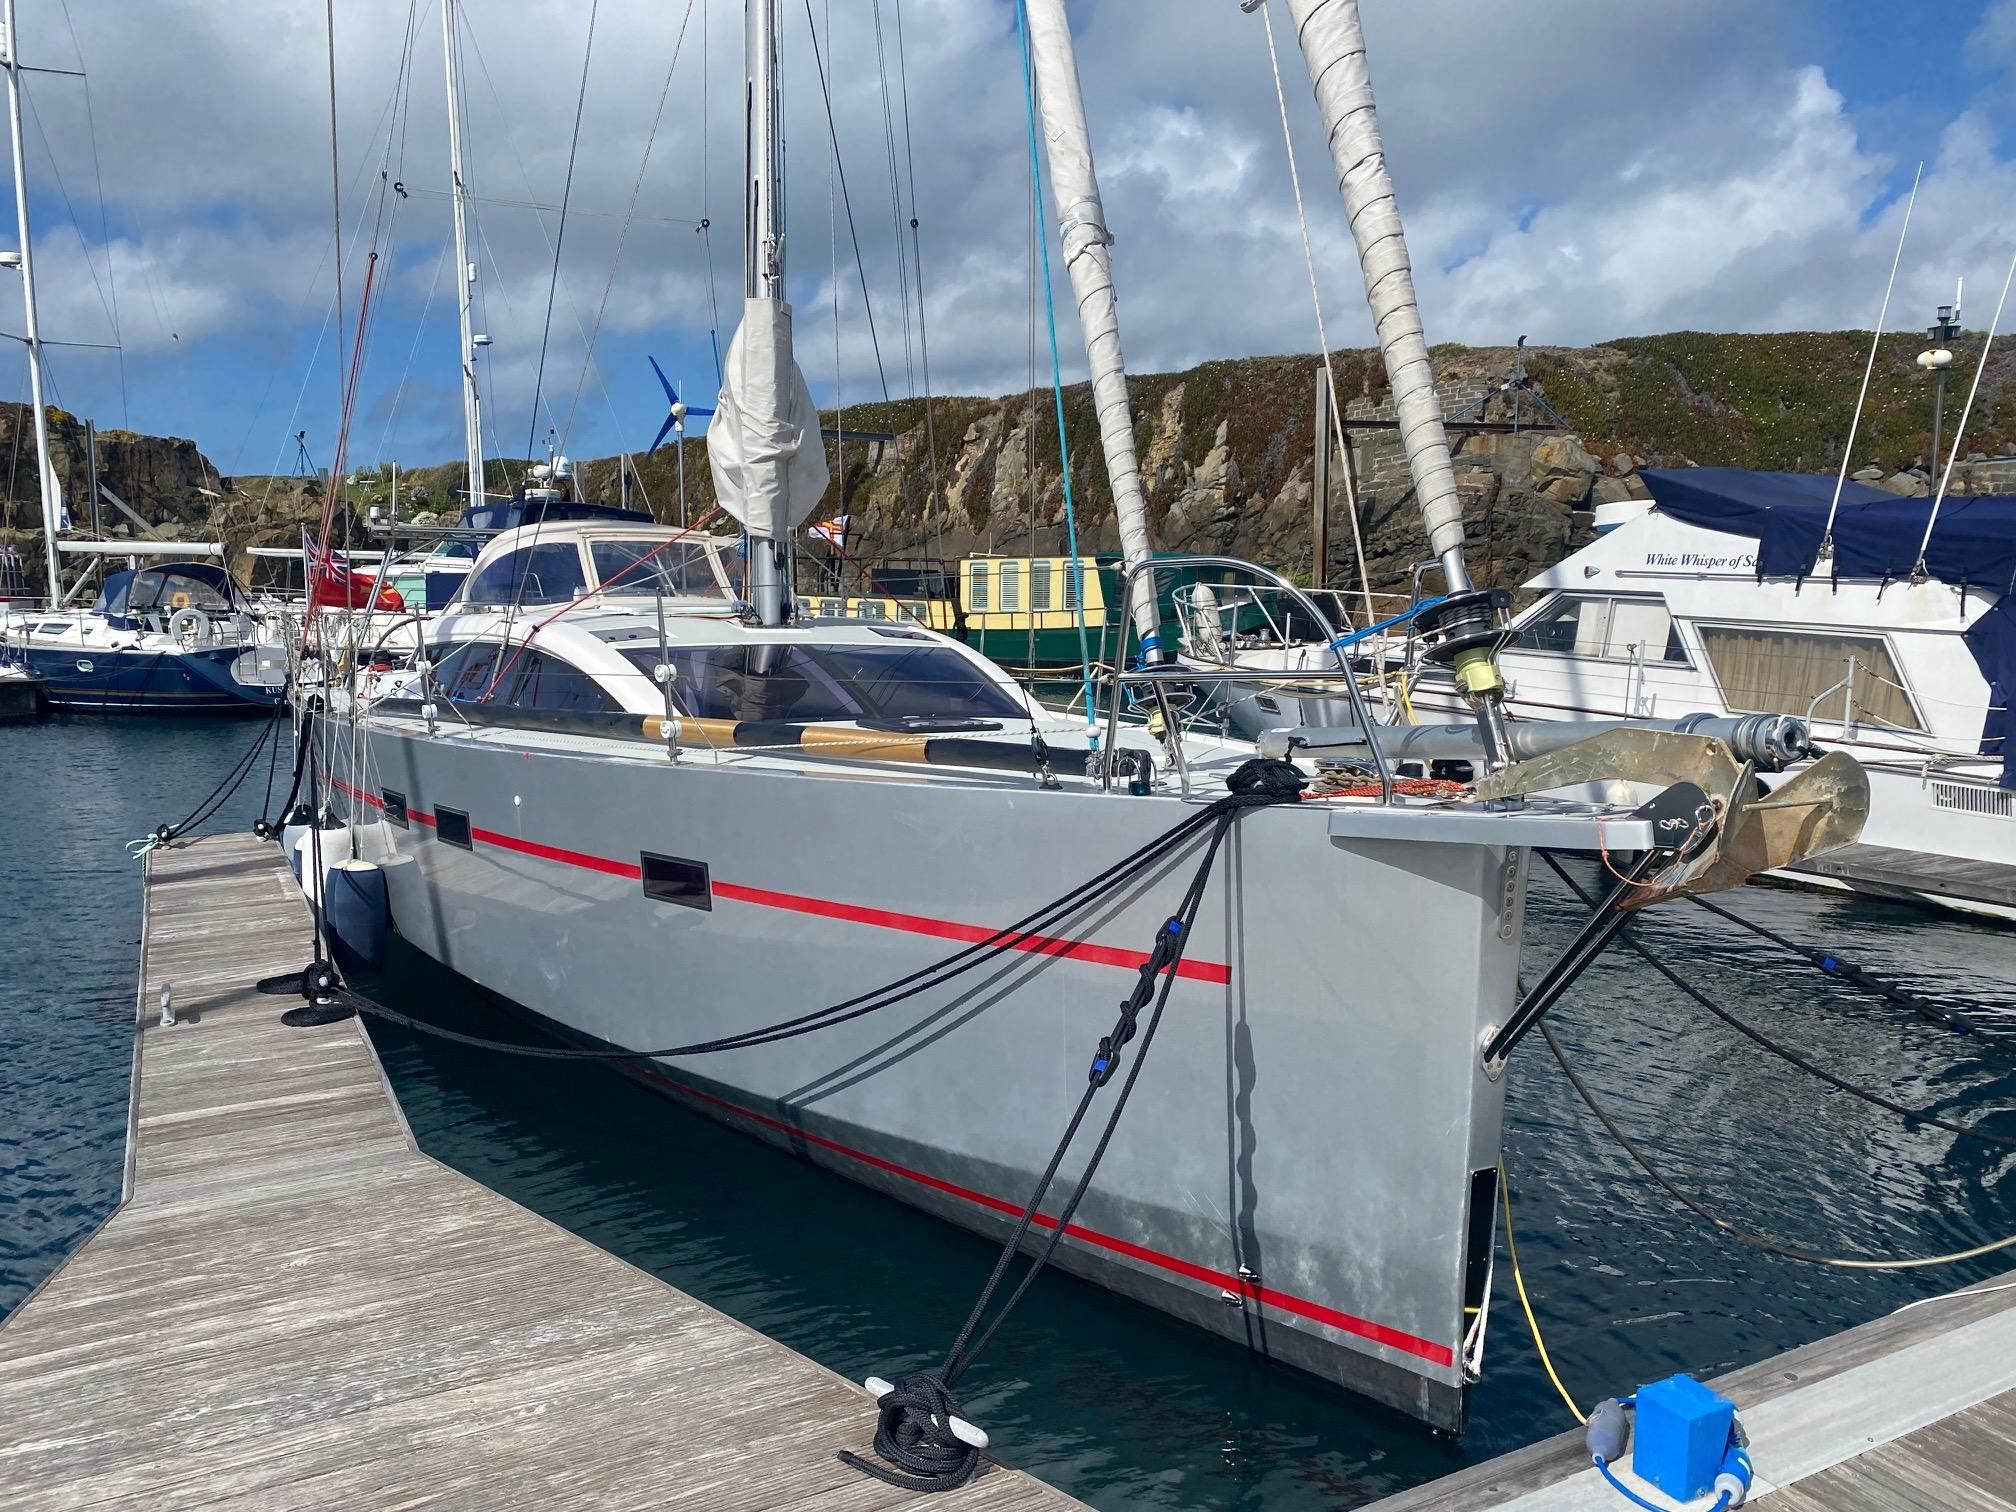 rm 1200 yacht for sale